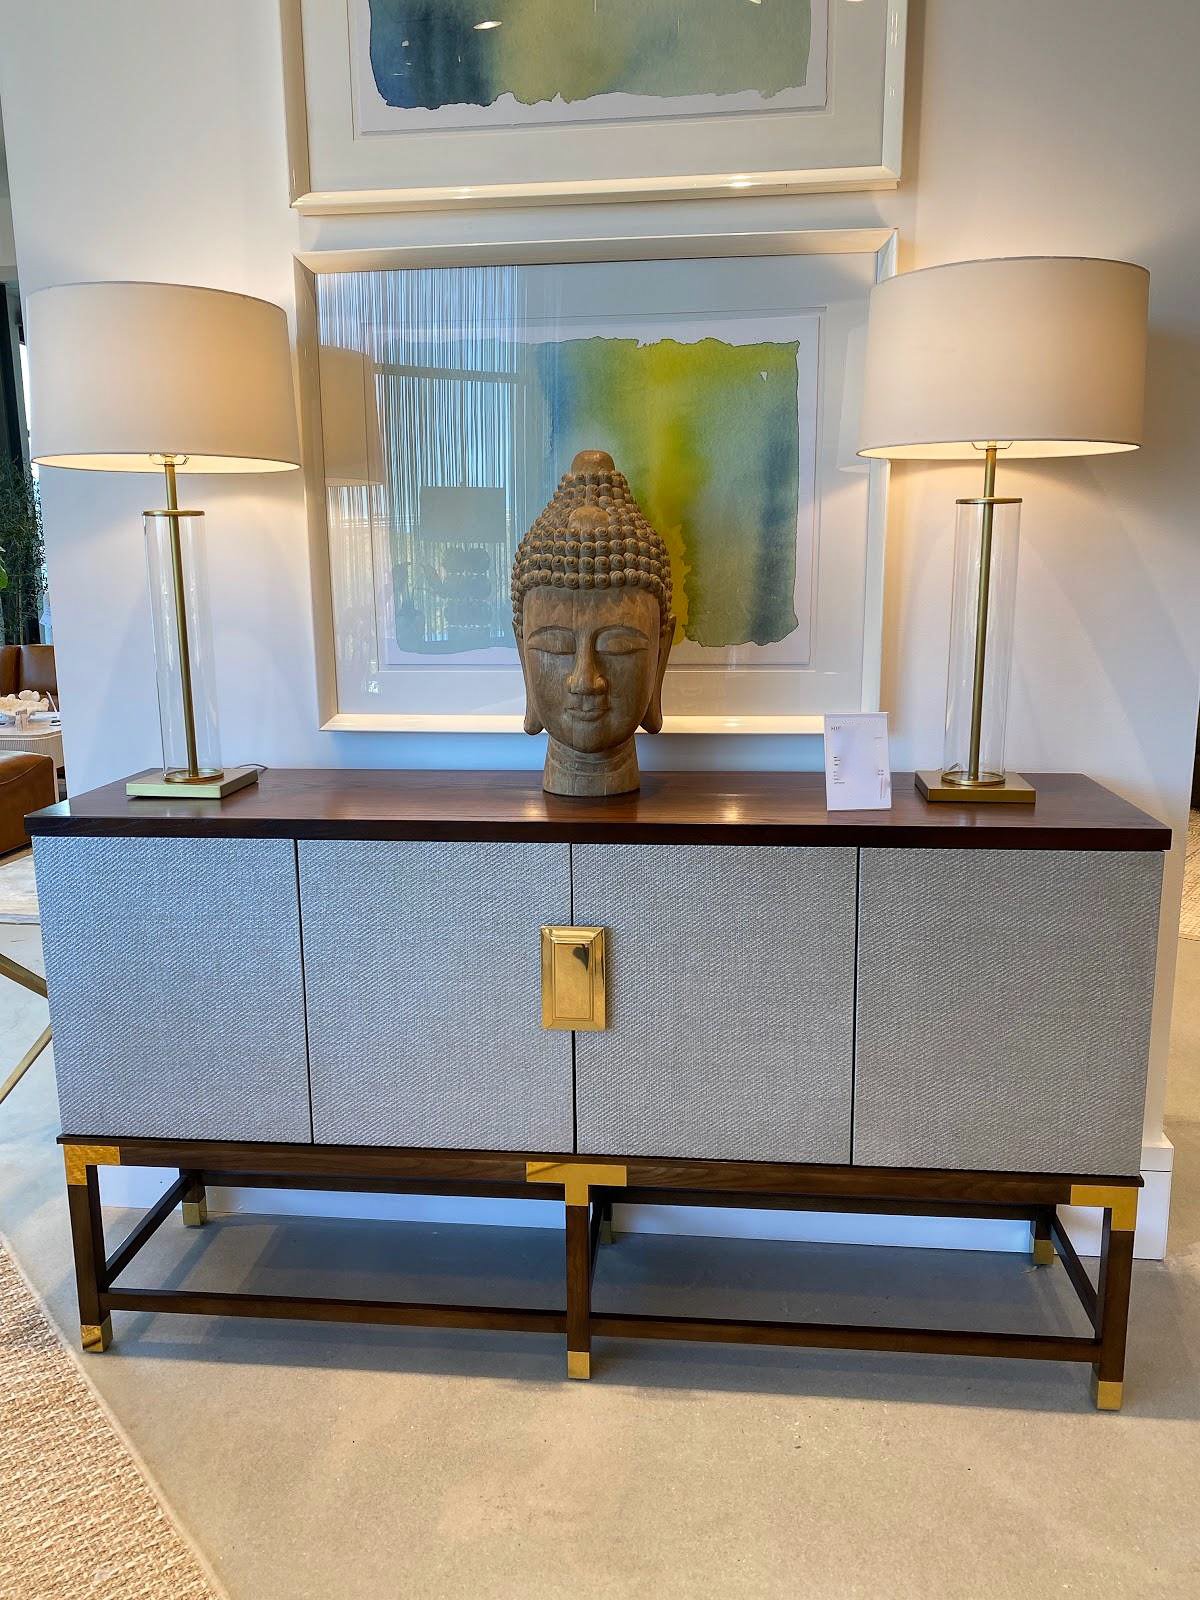 9buddha-head-century-furniture-brass-accents.jpg